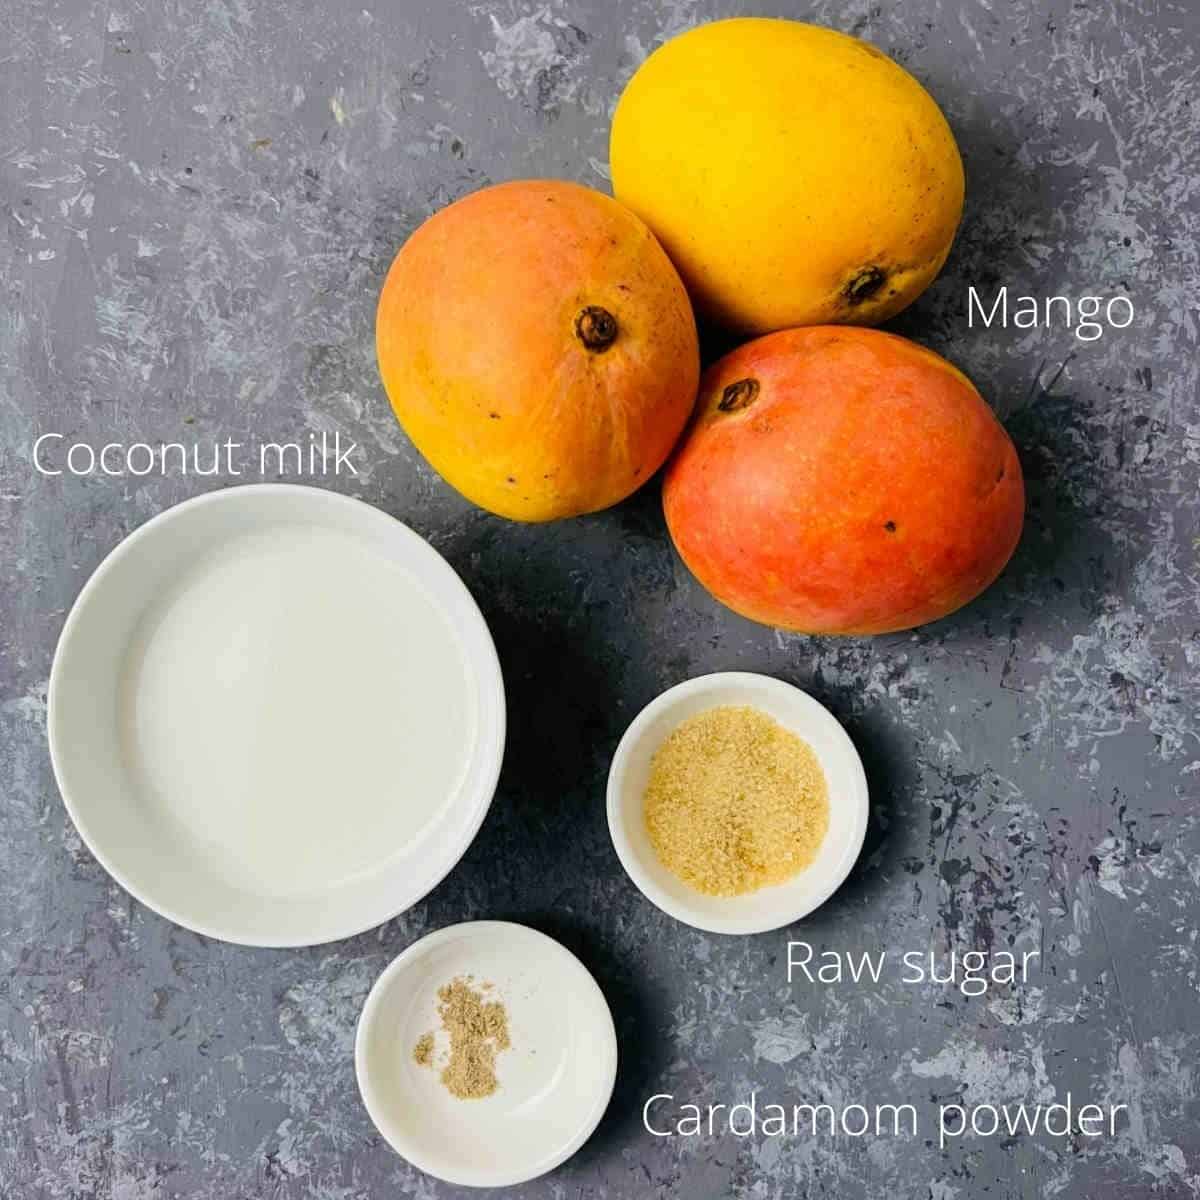 mango rasayan ingredients with labels.